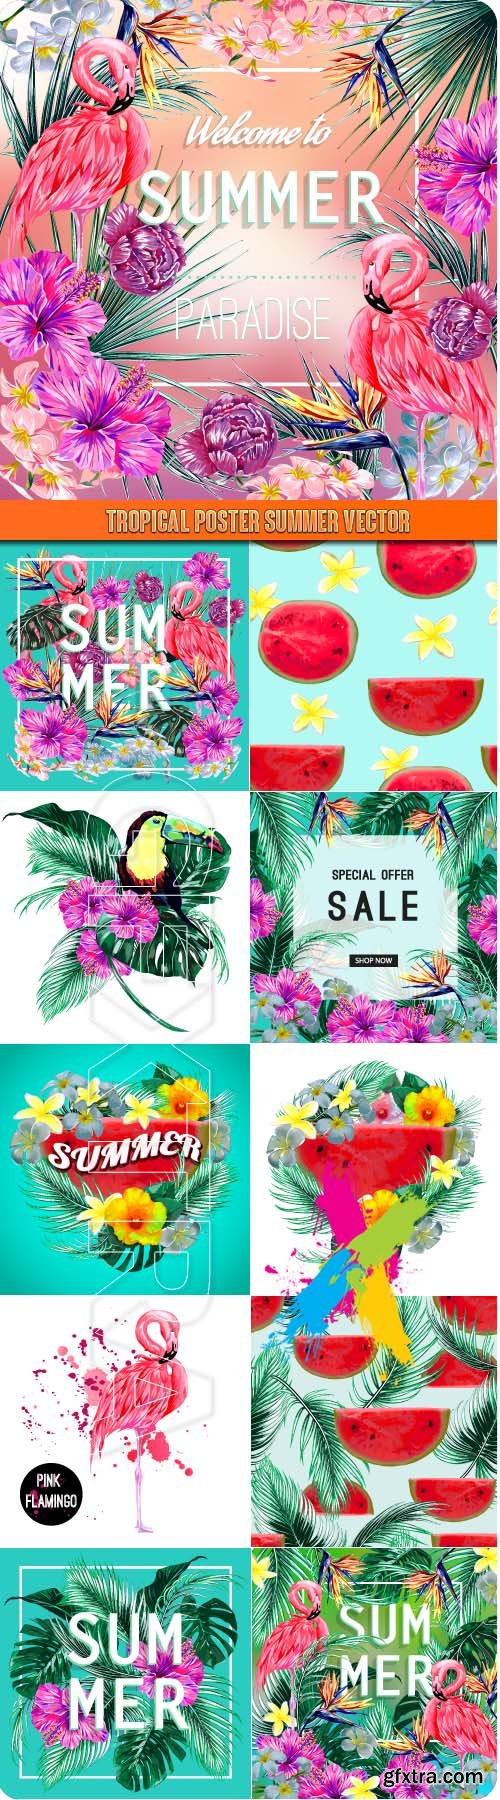 Tropical poster summer vector